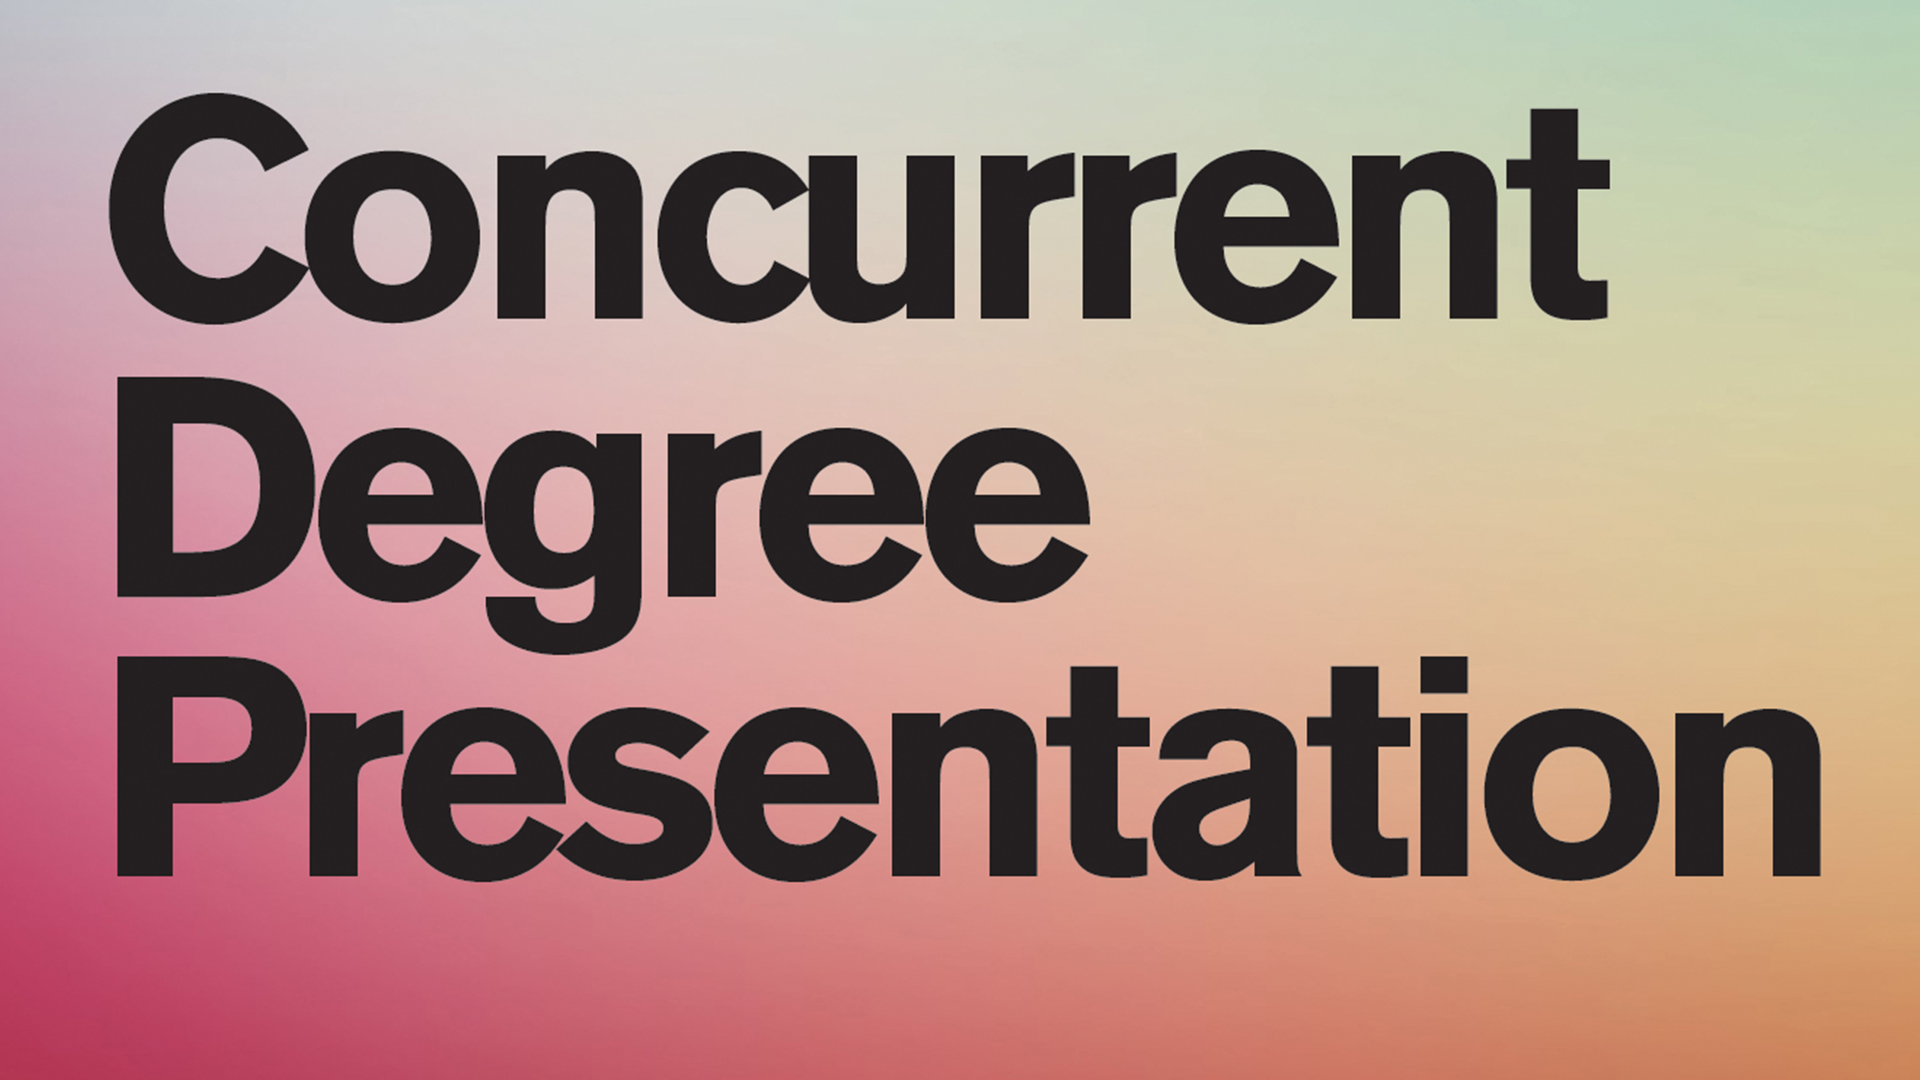  The Design School Graduate Concurrent Degree Presentation